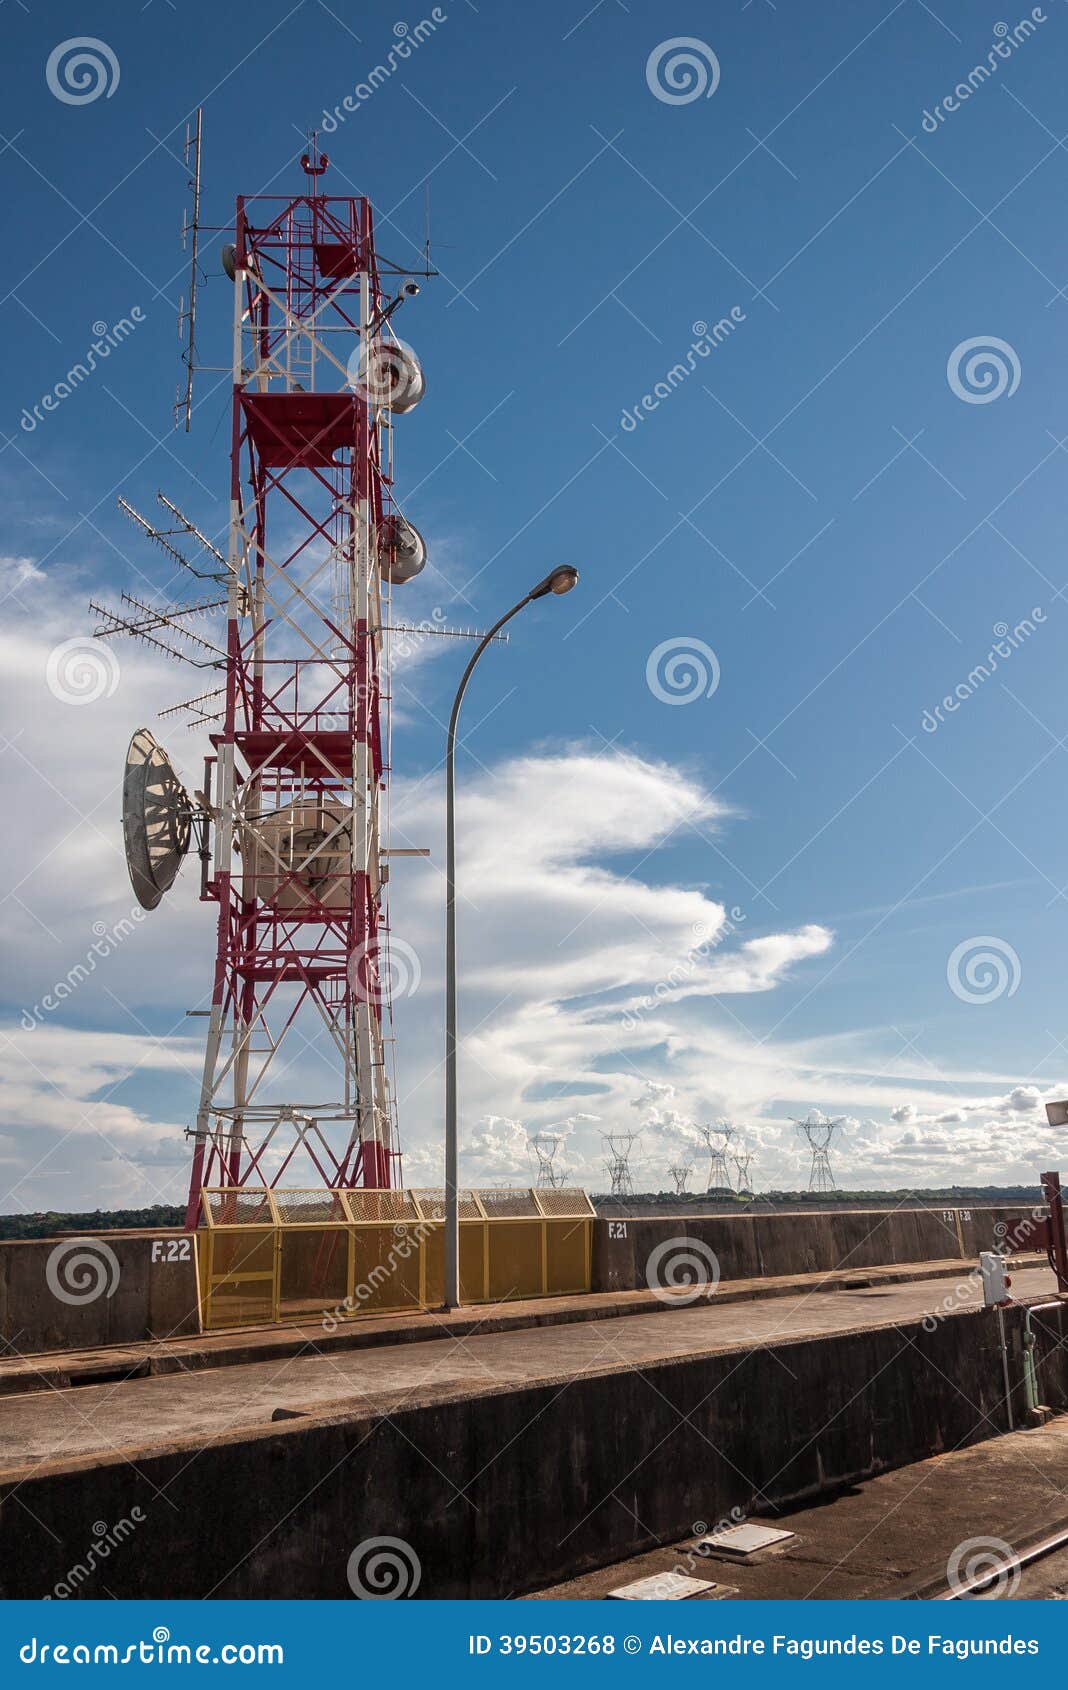 telecom transmission tower itaipu